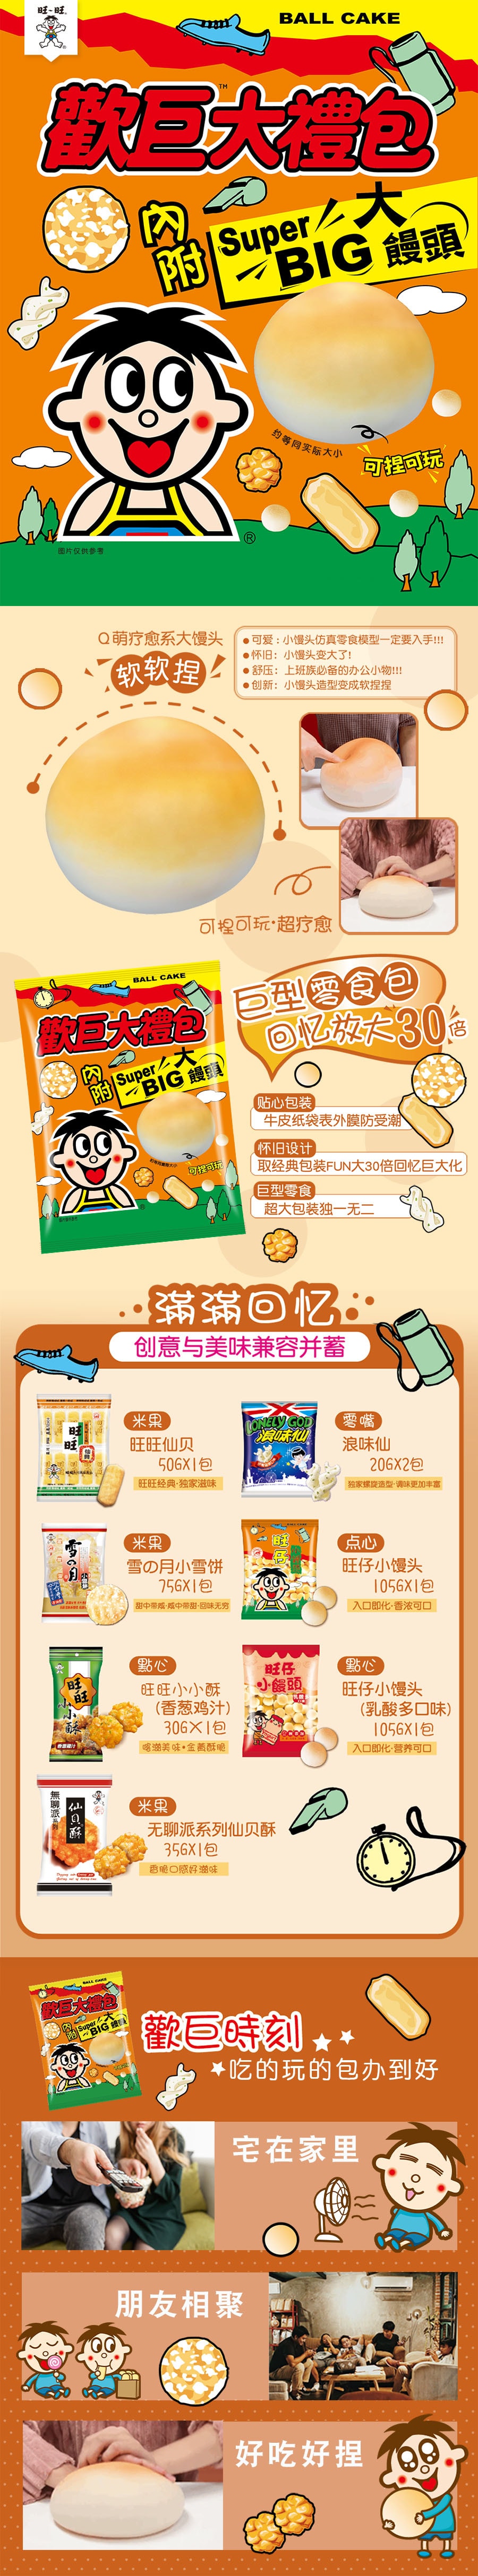 Taiwan Happy Together Huge Variety Snacks Bag - Super BIG Ball Cake 1Bag 440g (Free Blind Box)